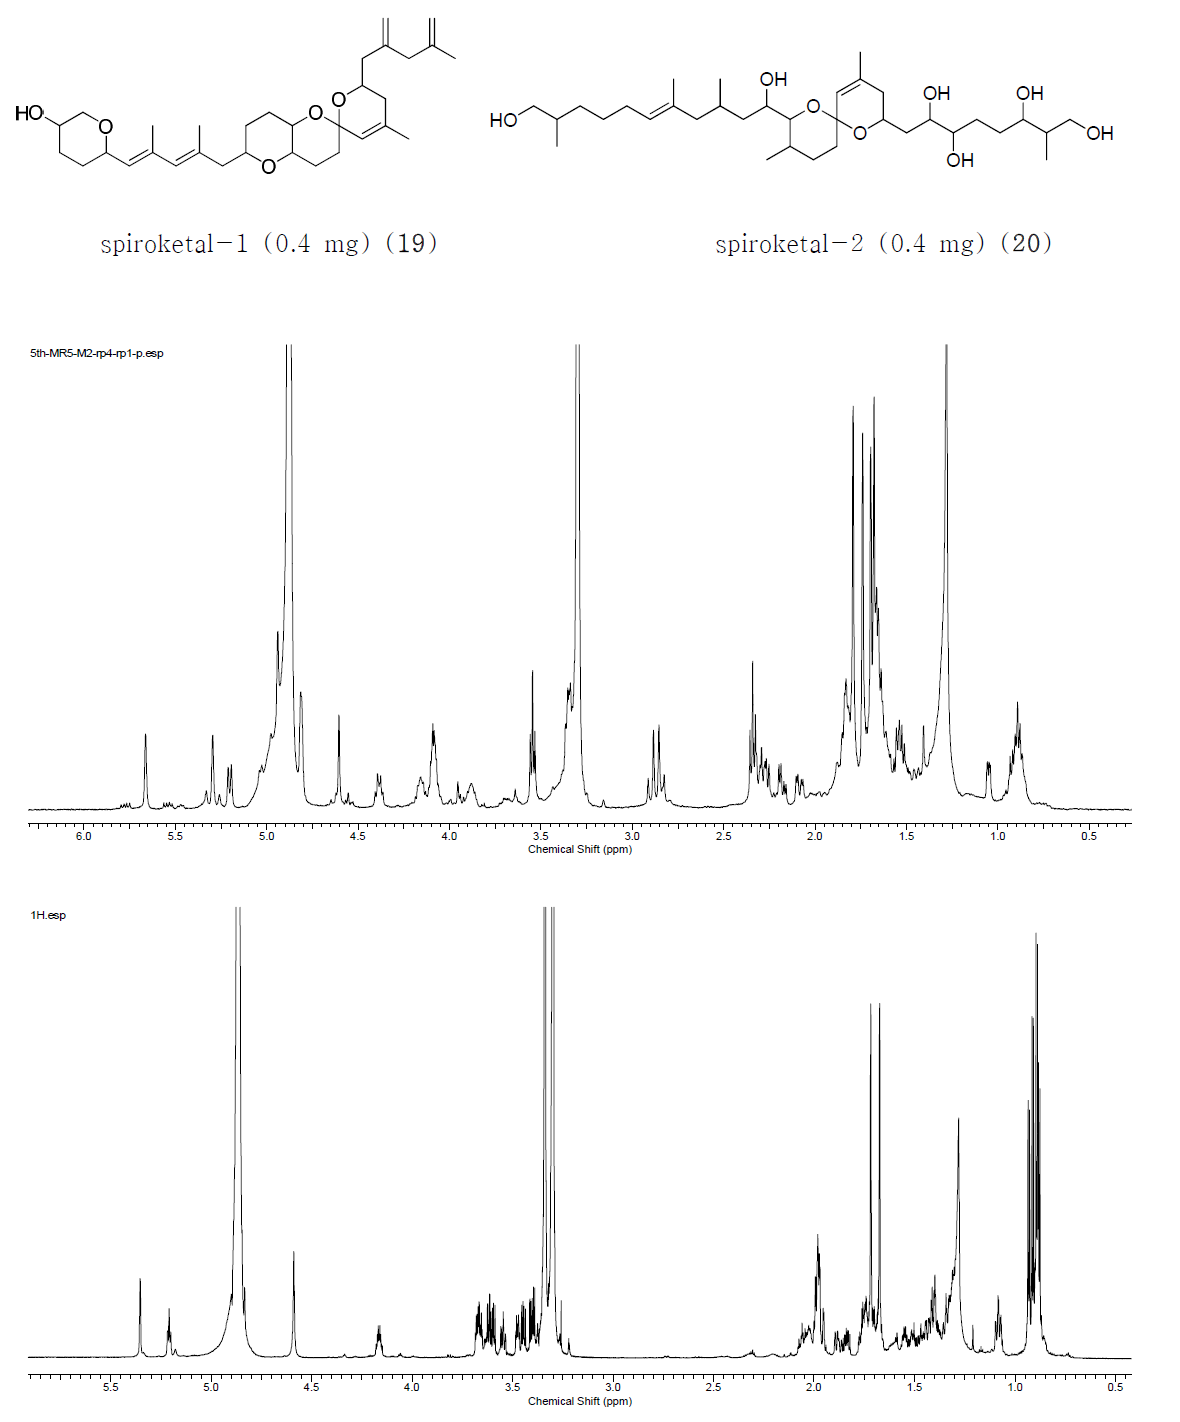 P. lima의 추가 분리 배양으로부터 분리된 신규 spirol 계열의 무독성 화합물의 평면 화학구조 (위)과 그의 1H NMR spectra (아래)